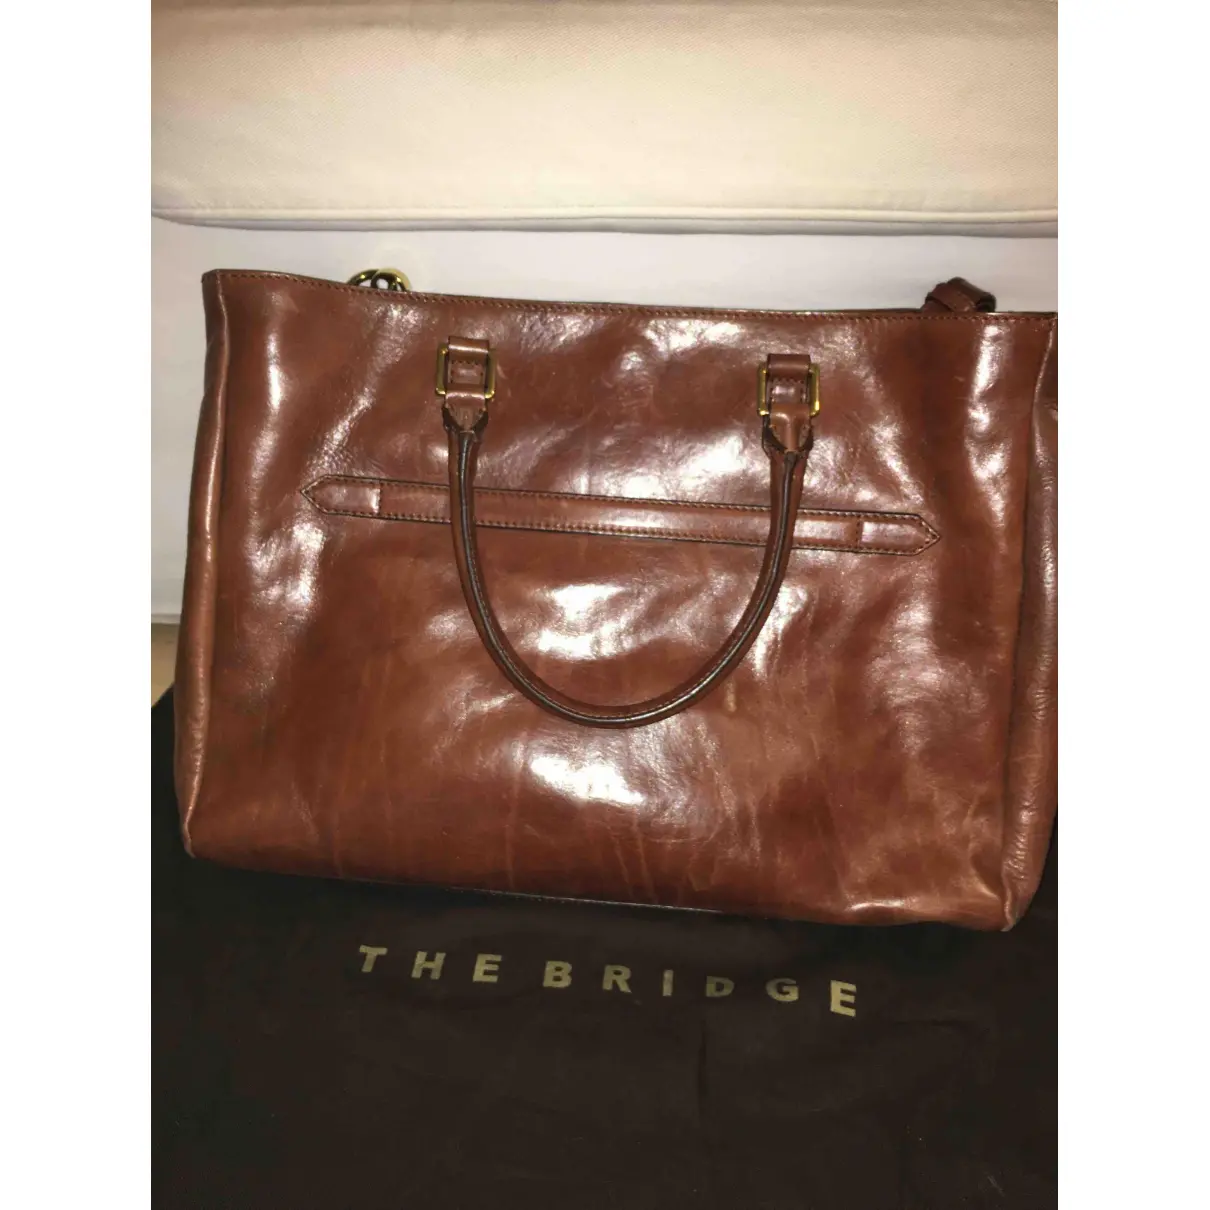 Buy THE BRIDGE Leather handbag online